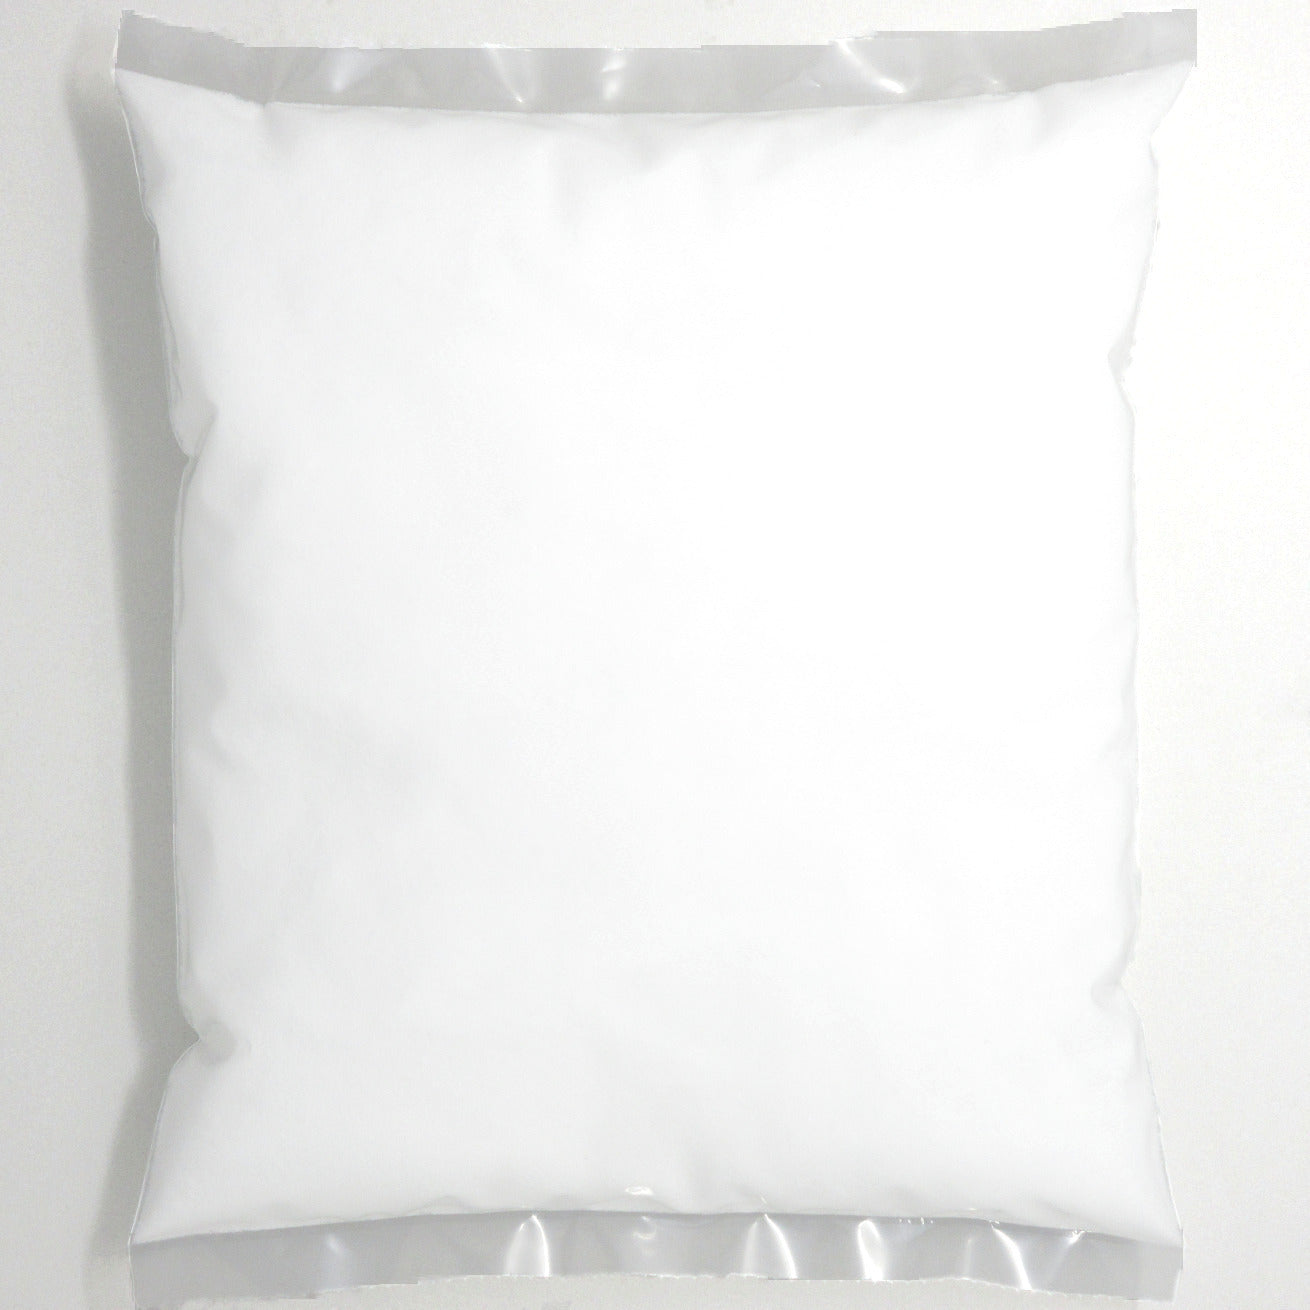 Flour Barrel product image - Table Salt